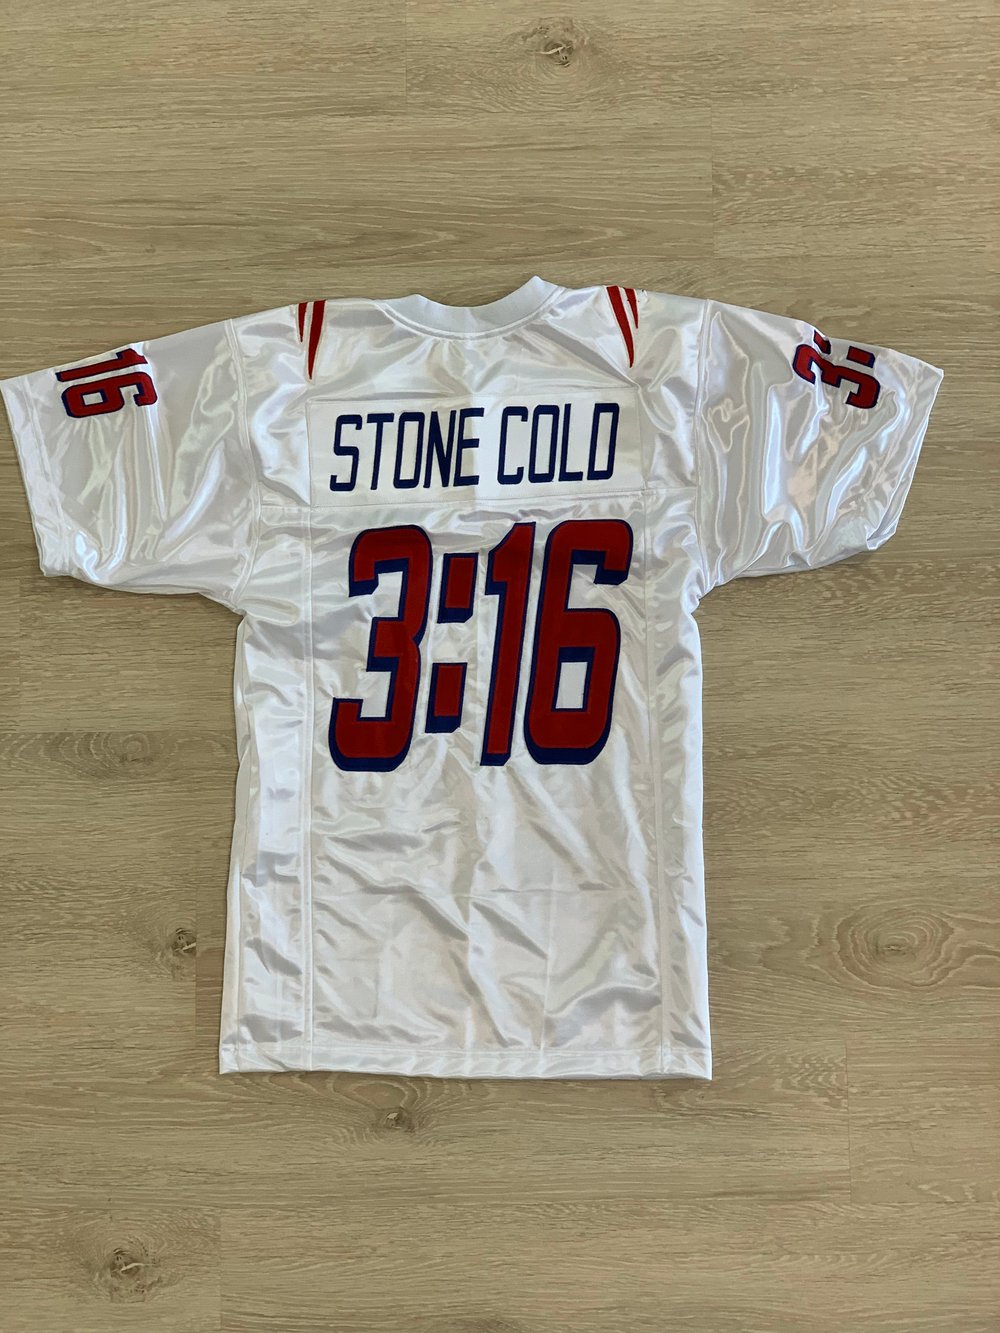 Image of Stone Cold Steve Austin PATS Football jersey